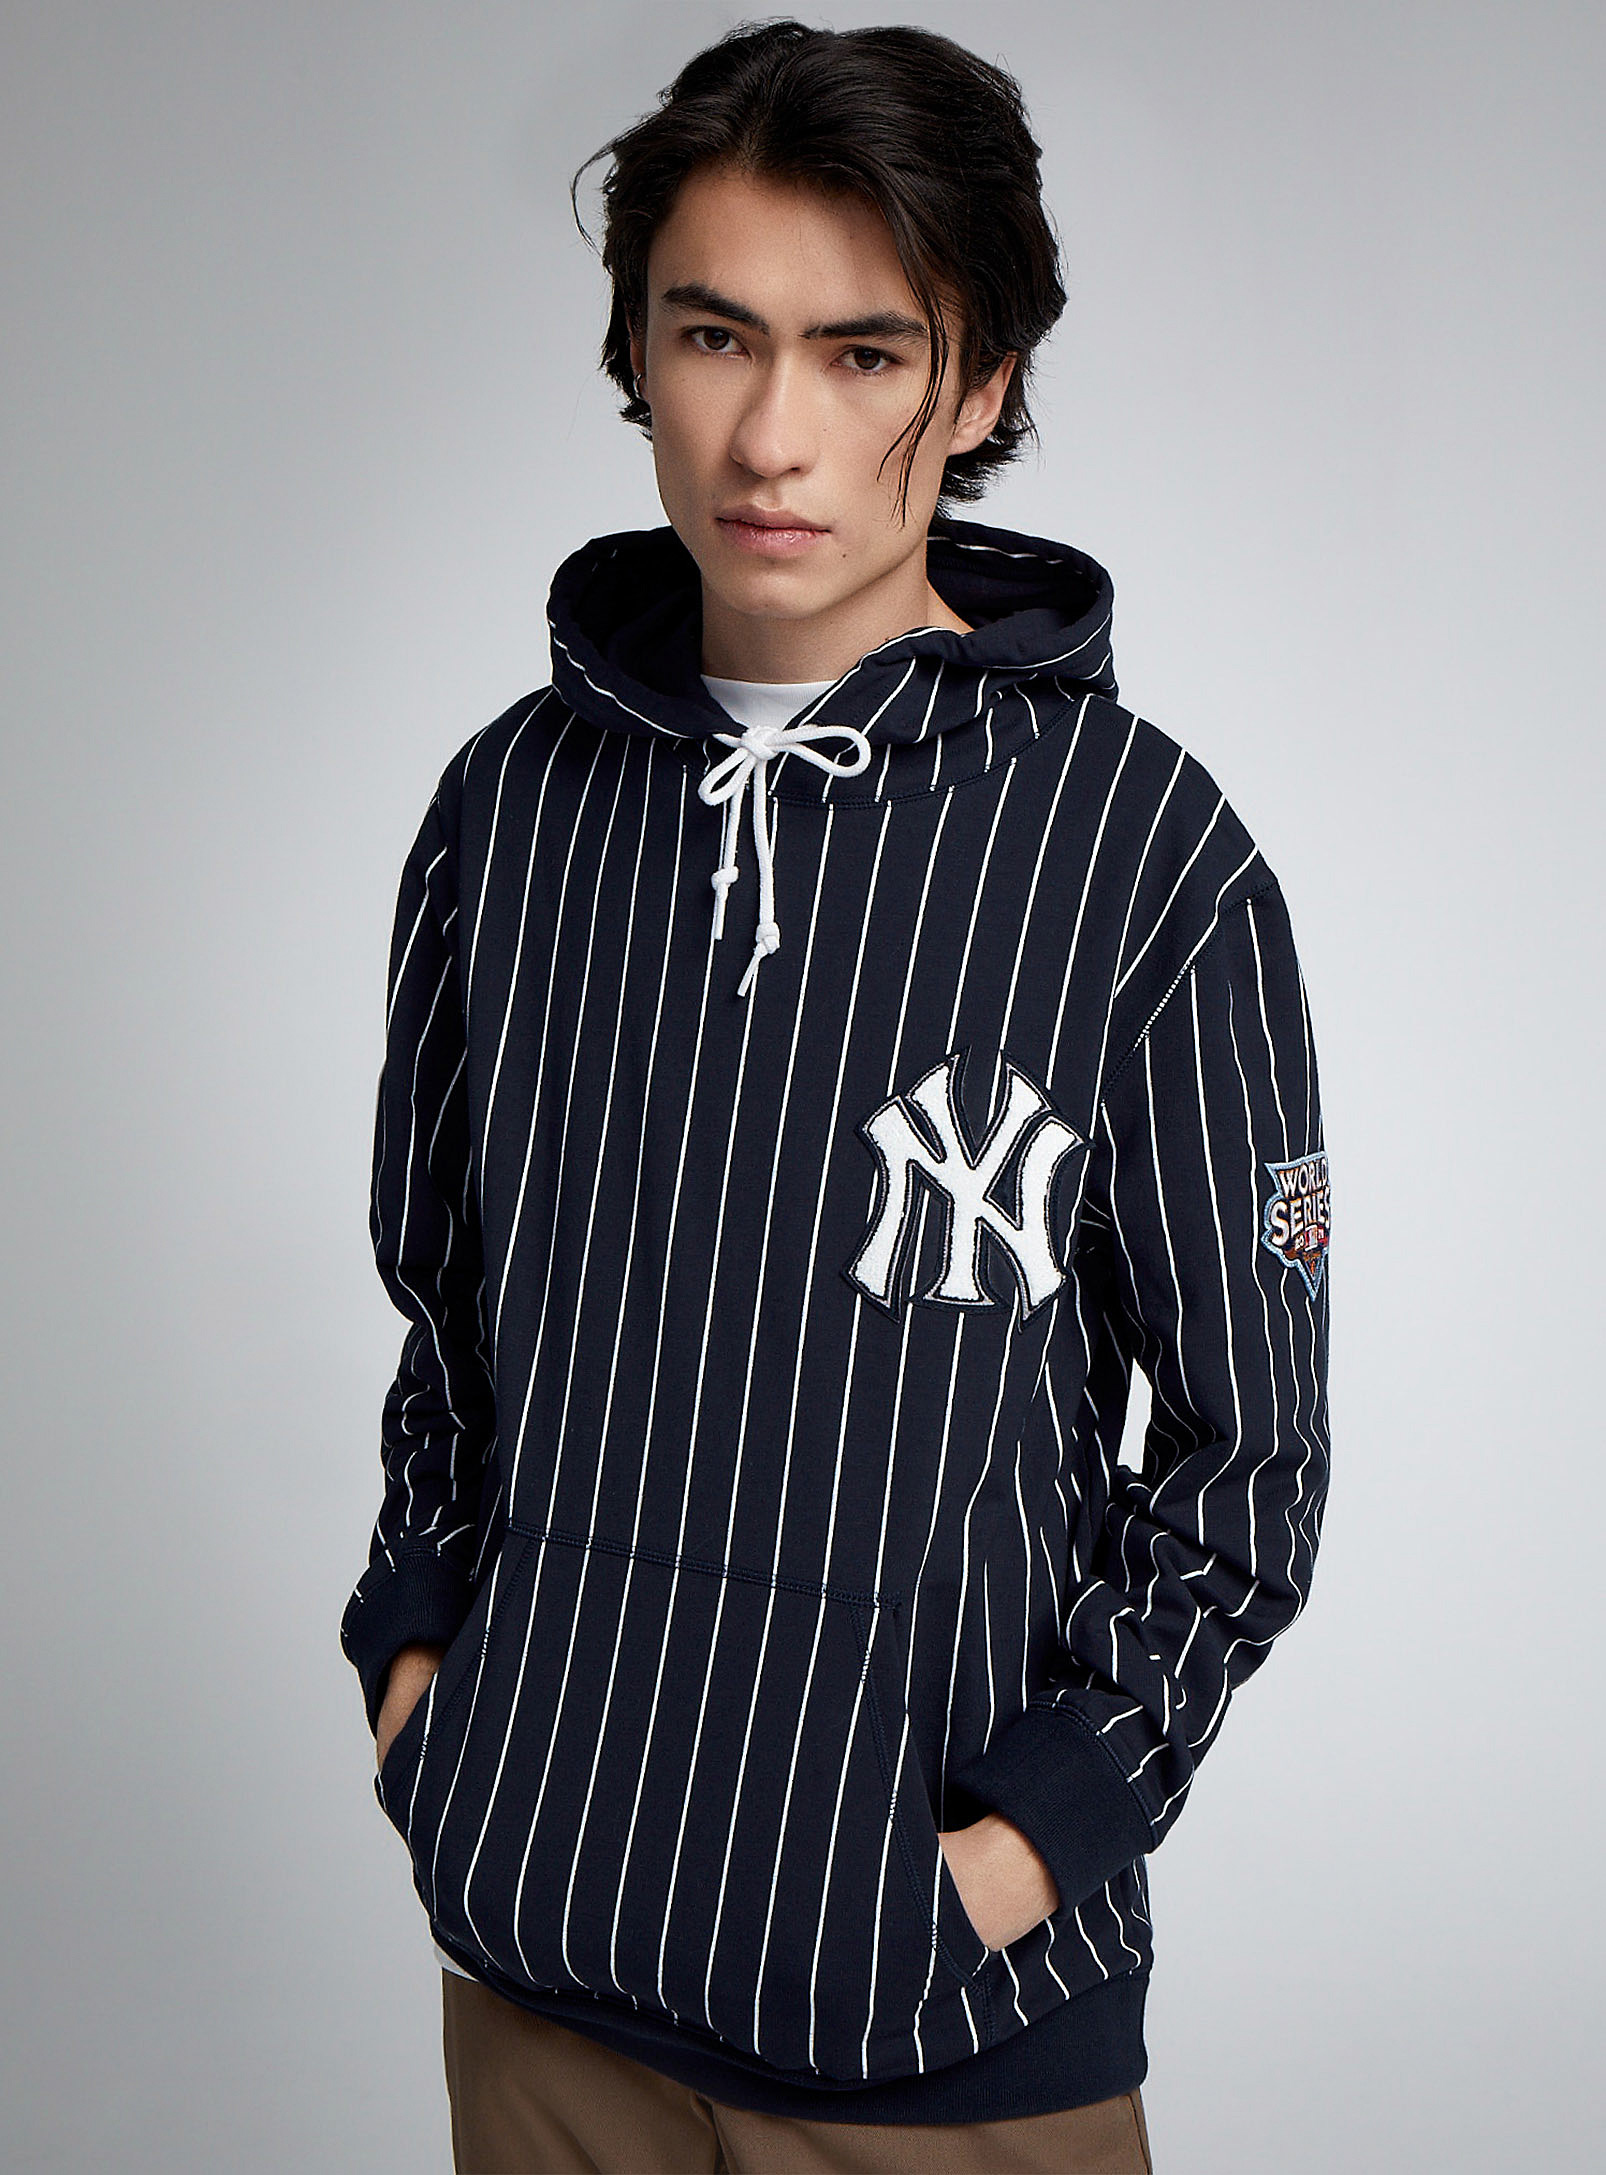 New Era - Men's Yankees thin striped hoodie